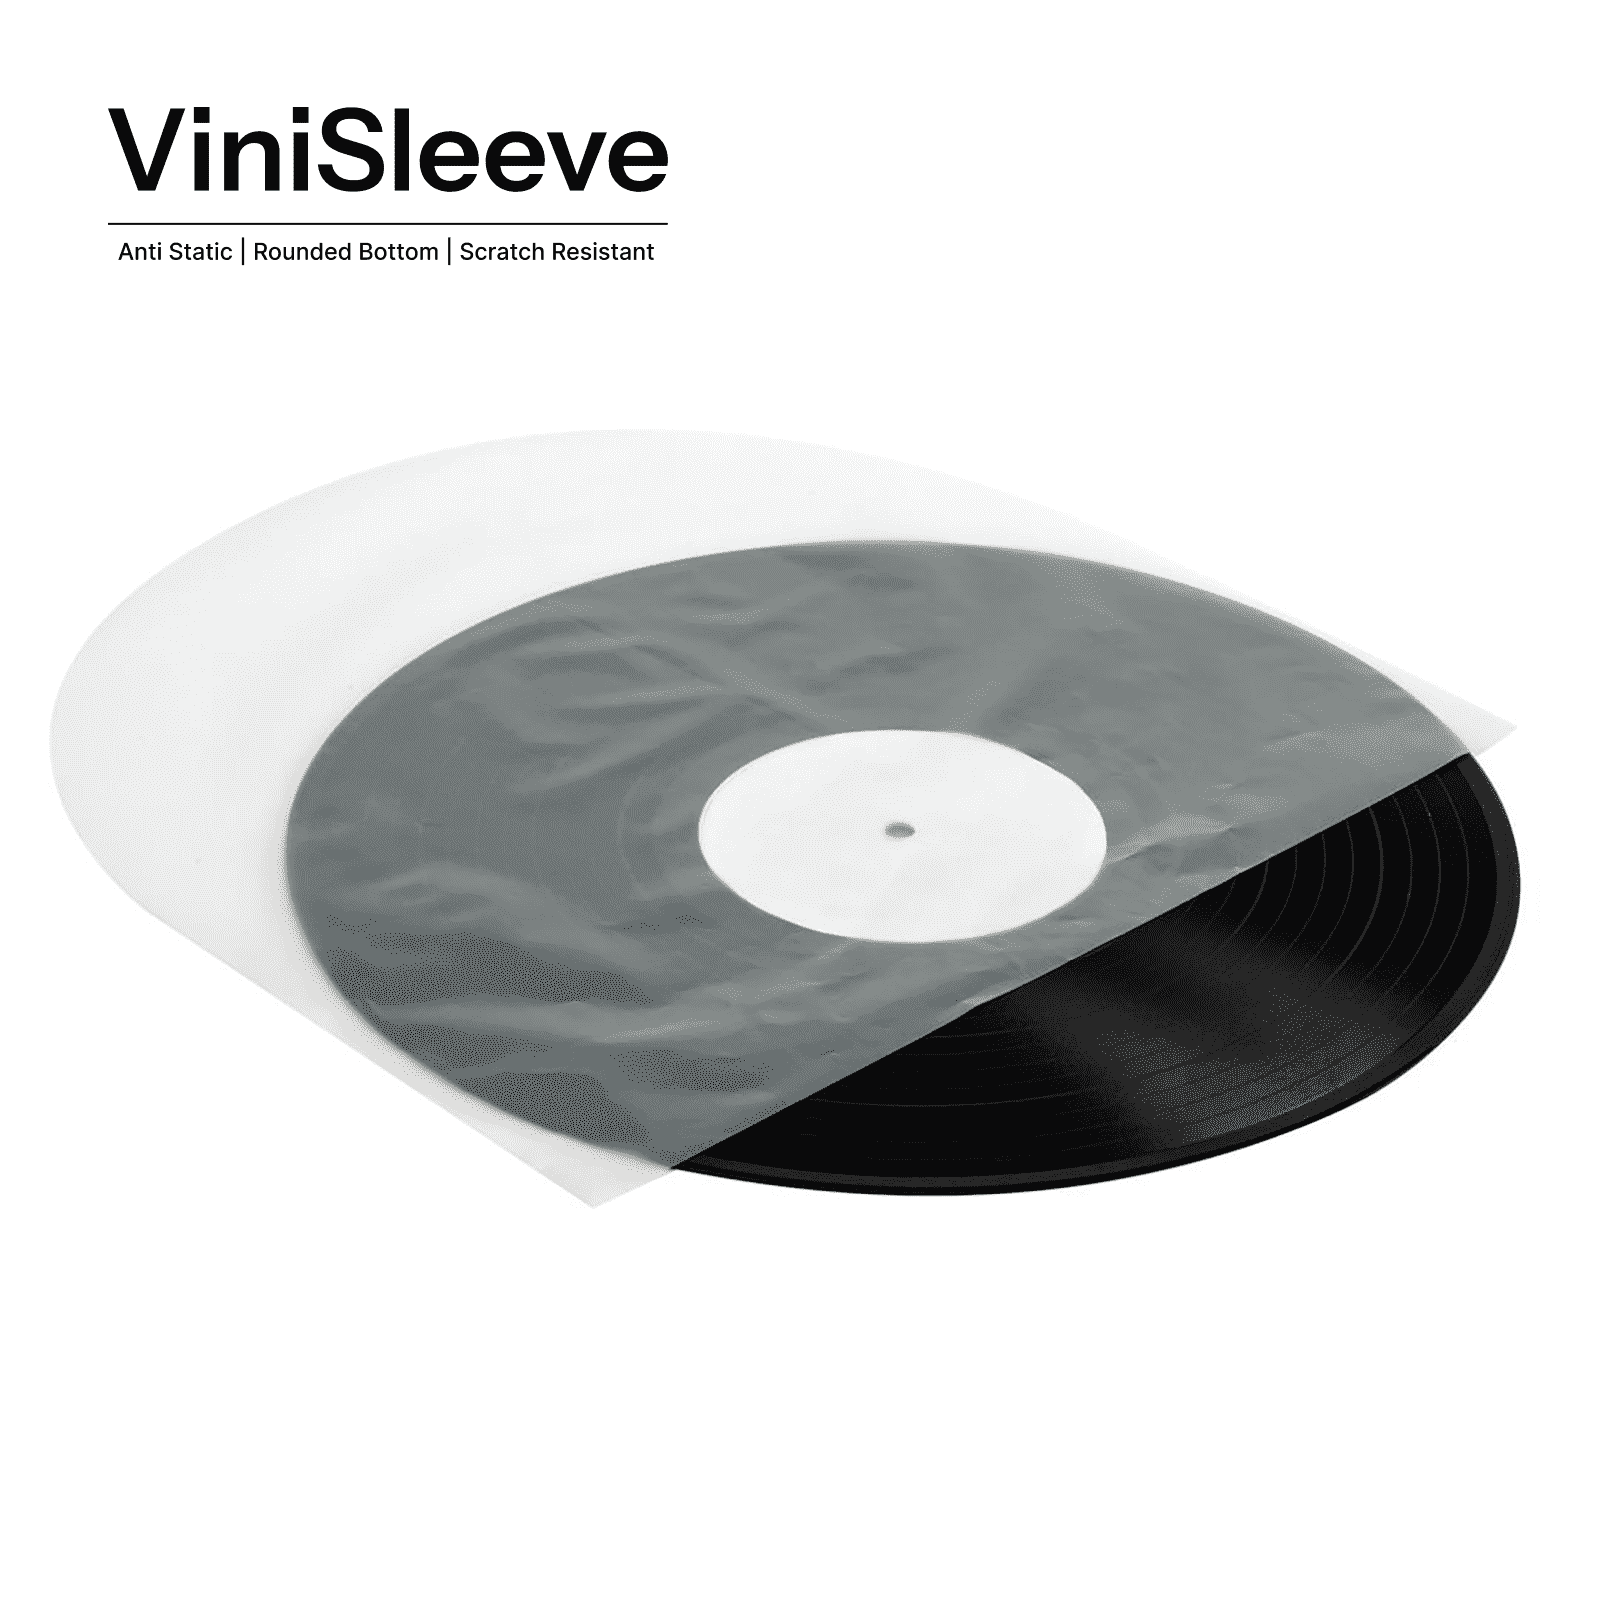 Vinisleeve - Buy High Quality Vinyl Record Inner Sleeves